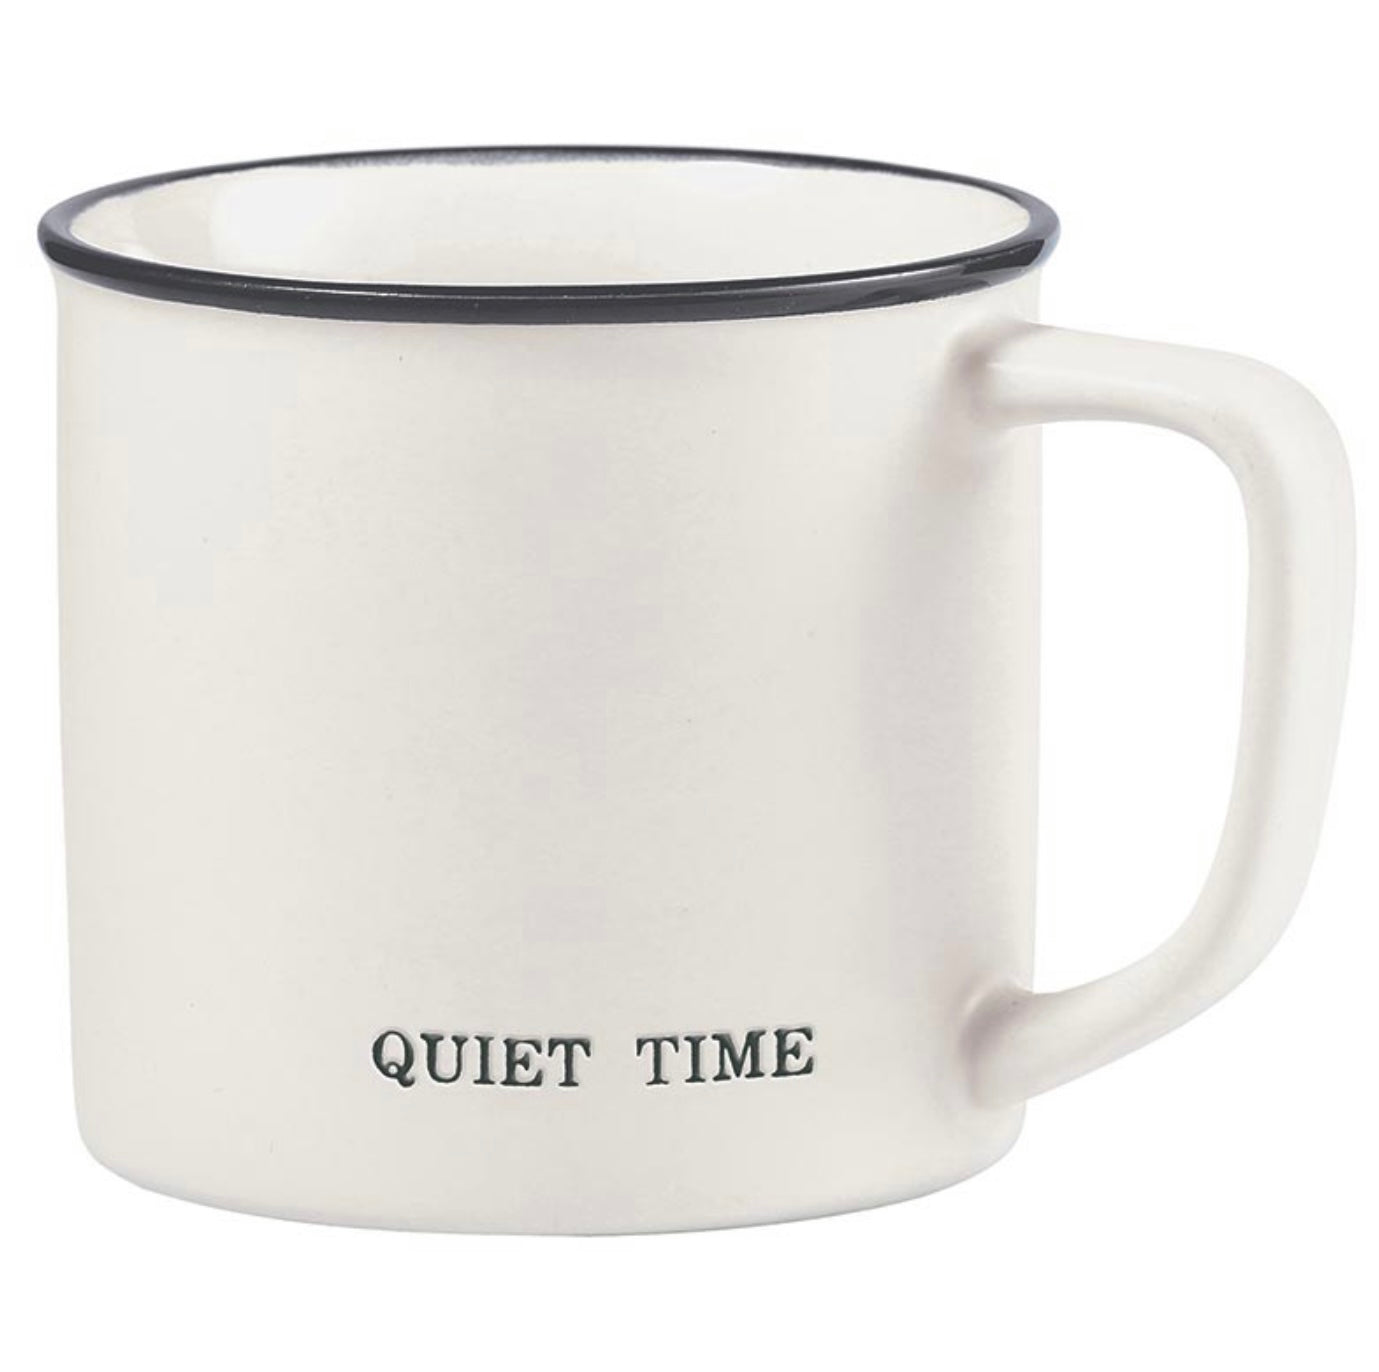 Quiet time mug